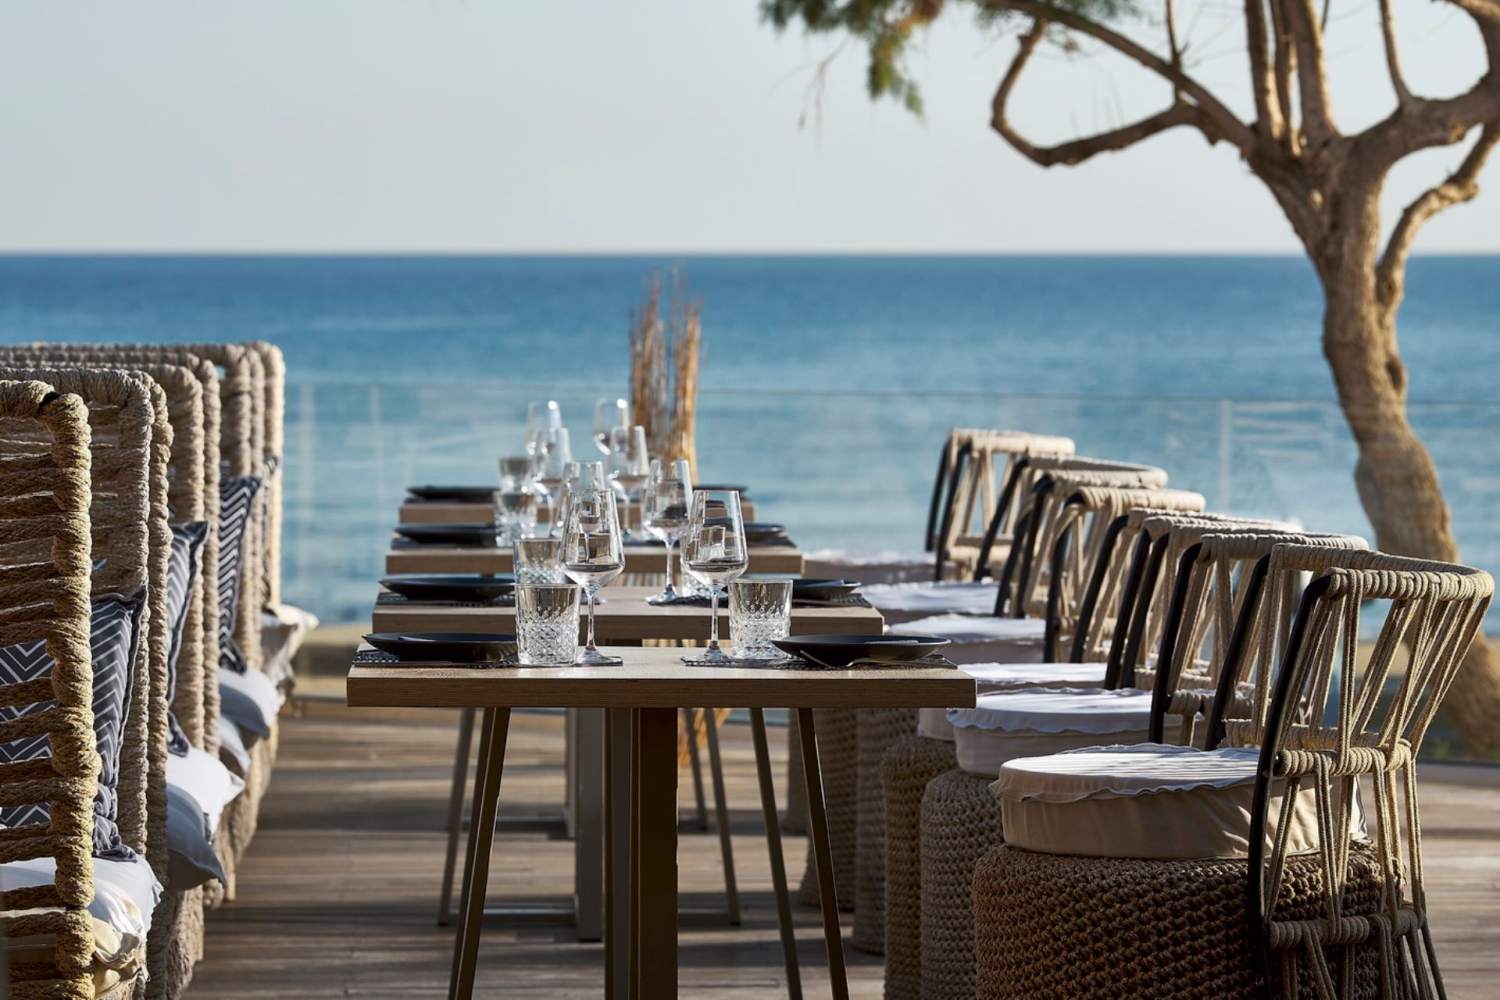 Elysium Boutique Hotel & Spa Hersonissos, Crete - Greece